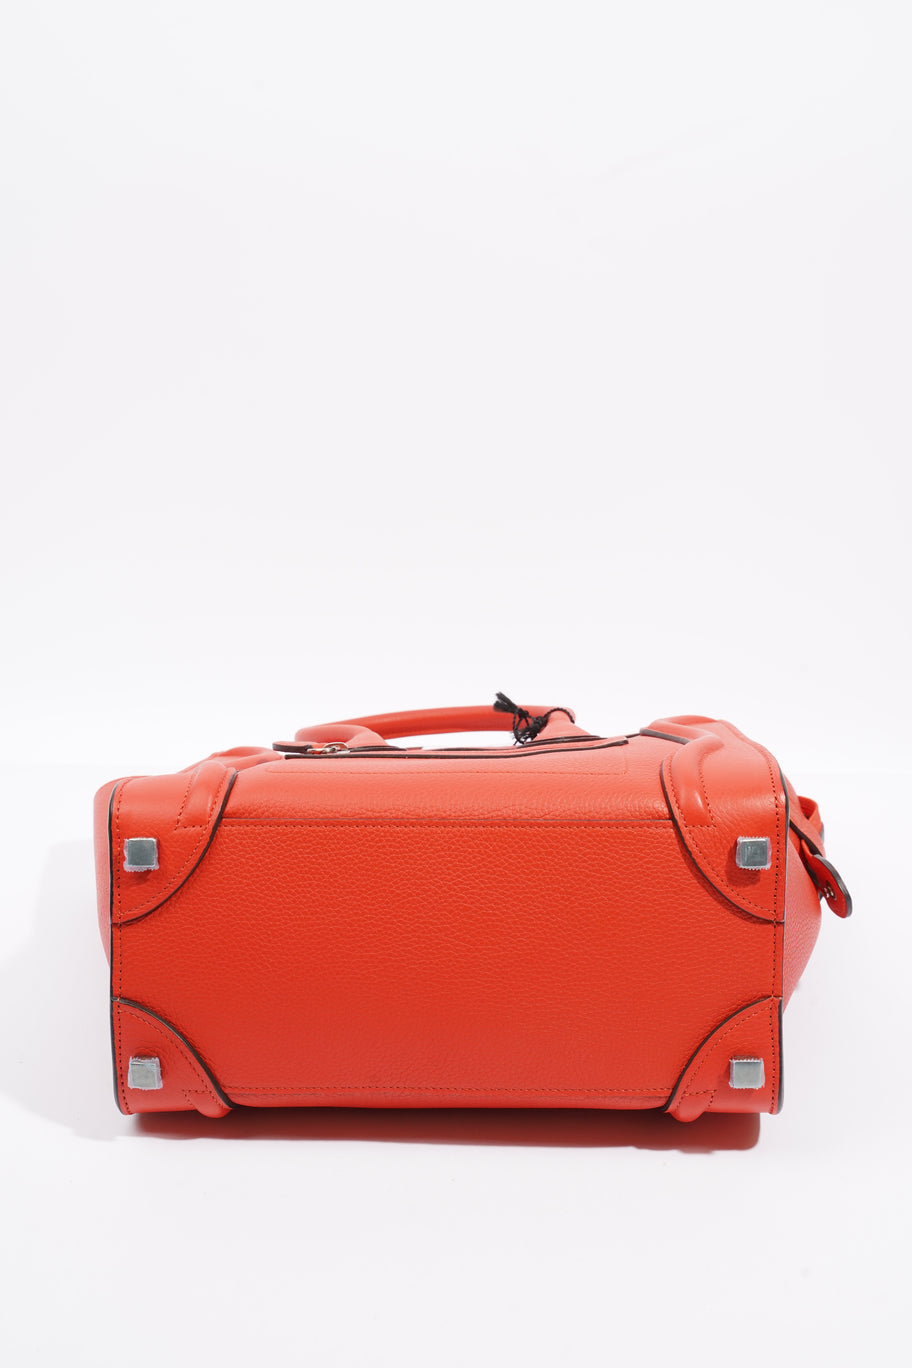 Micro Luggage Orange Calfskin Leather Image 7